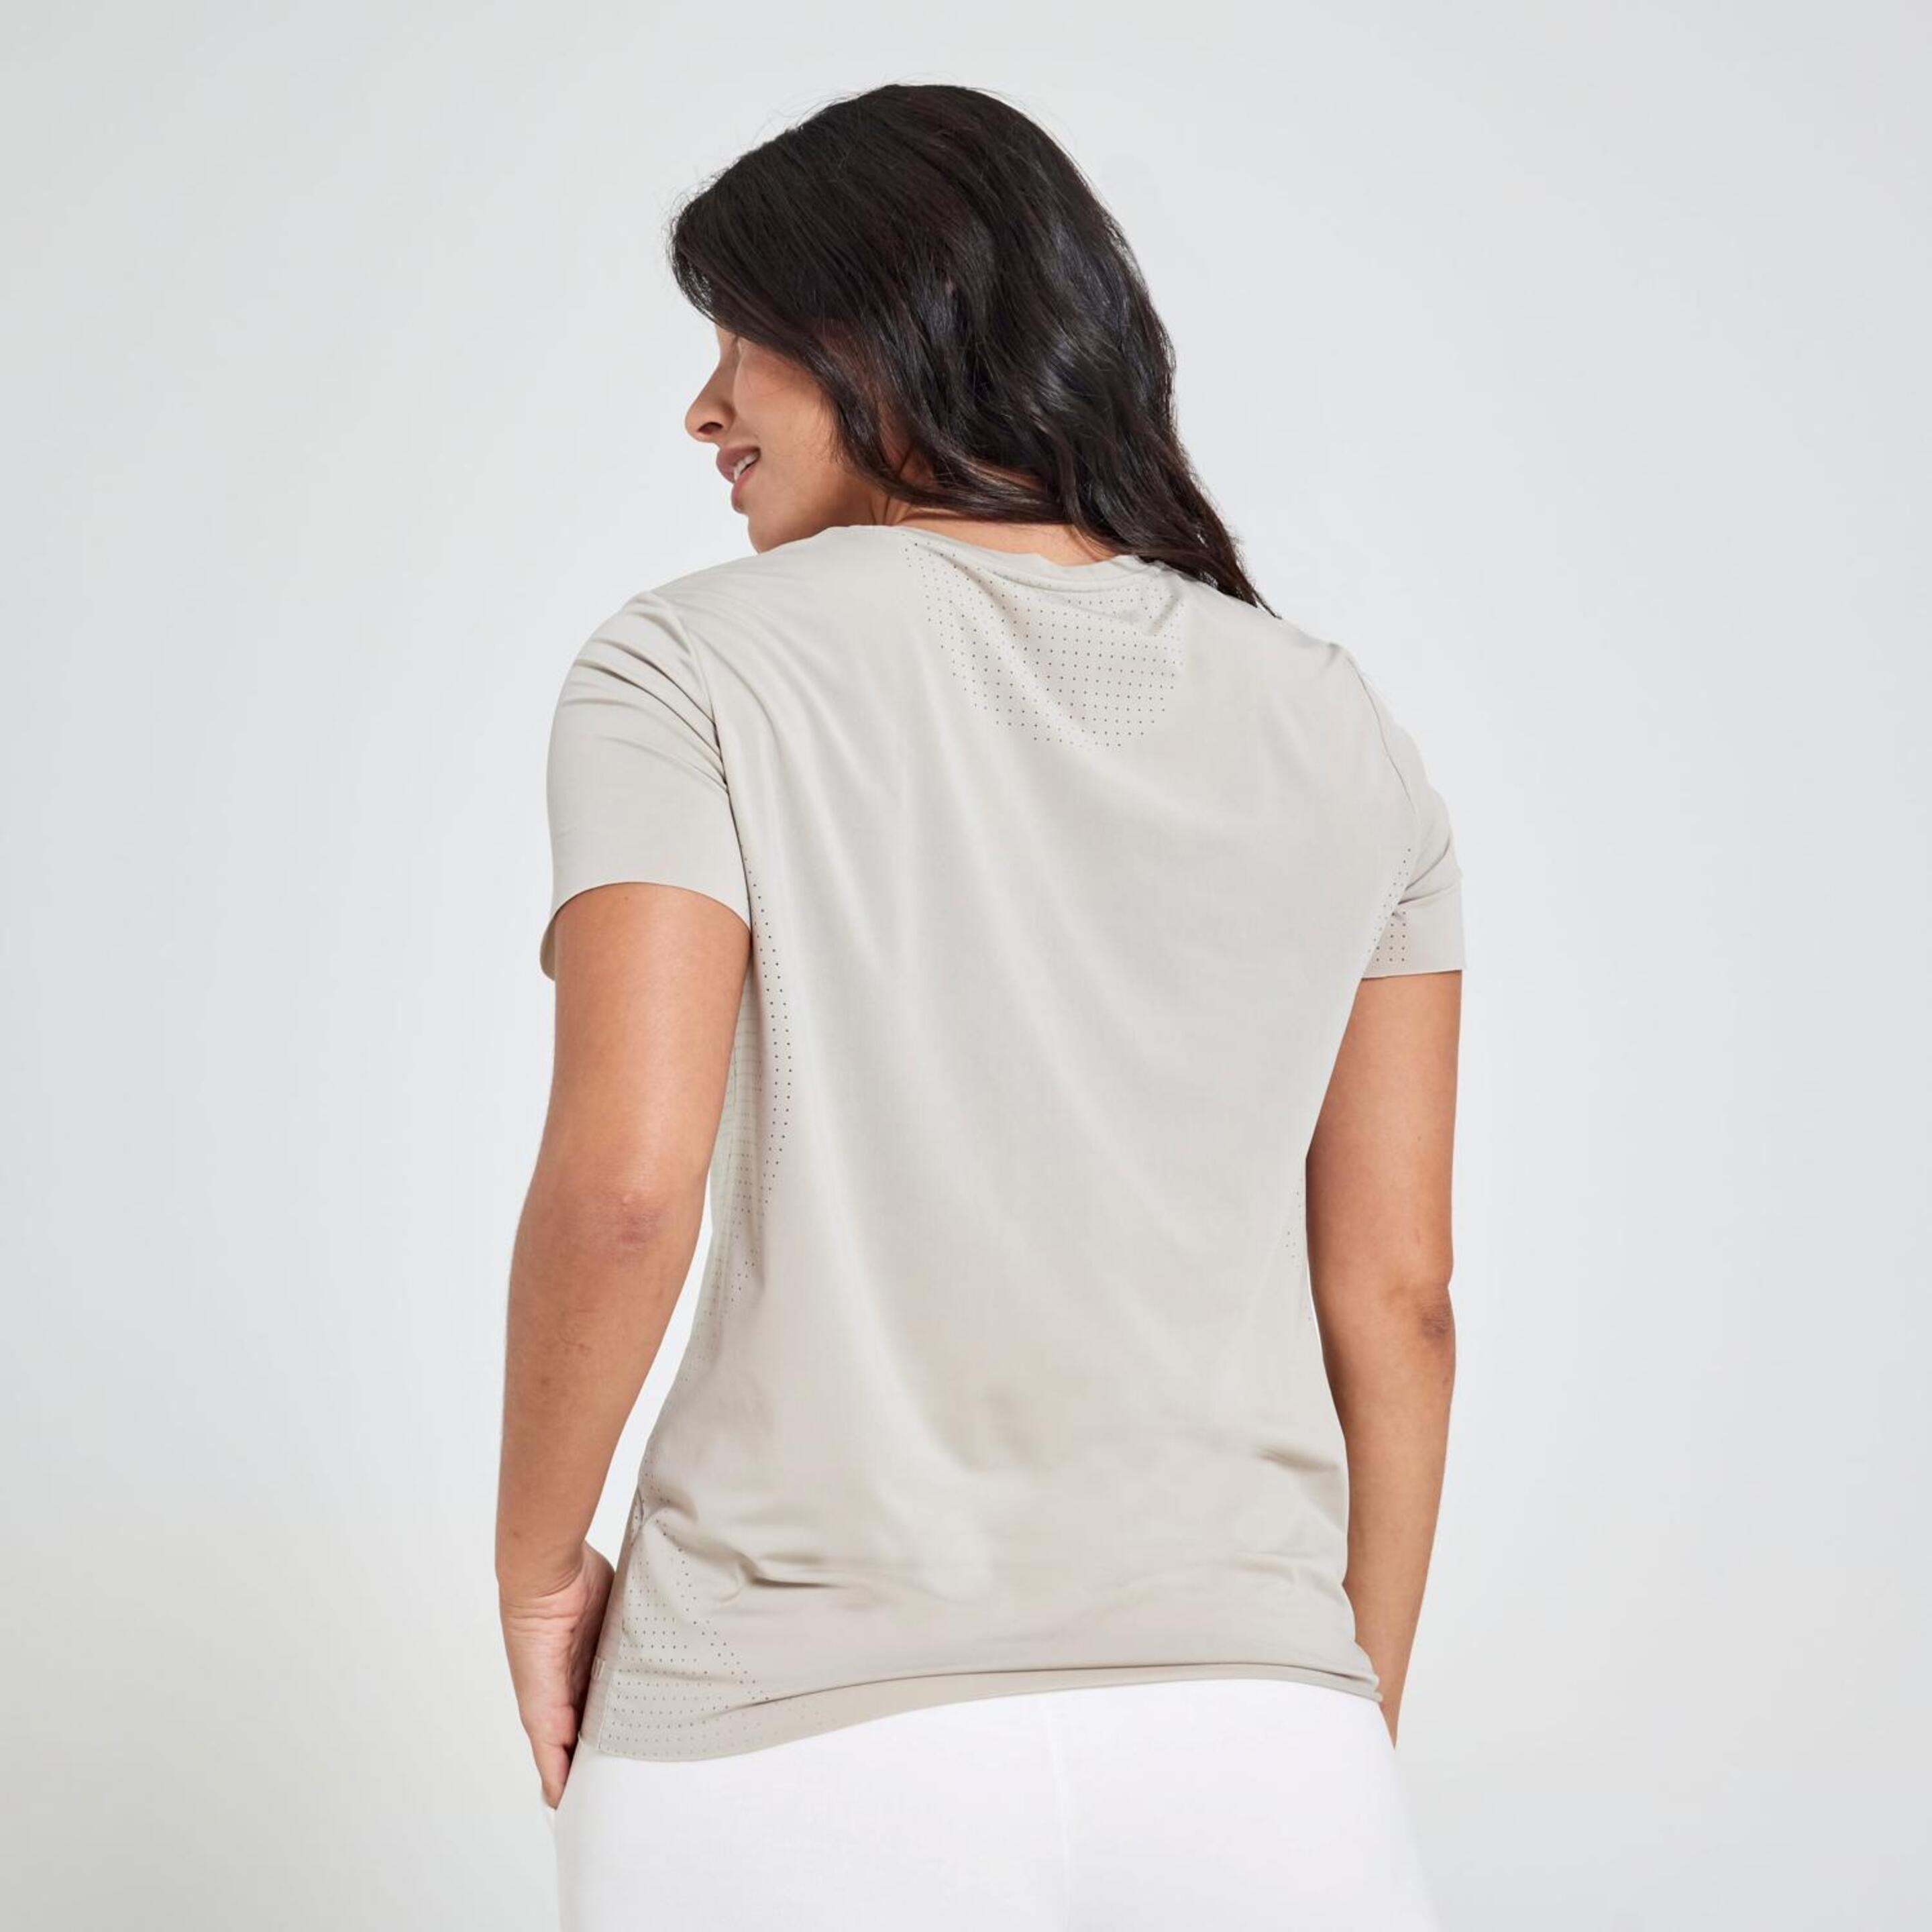 Doone Casual Luxe - Arena - Camiseta Mujer